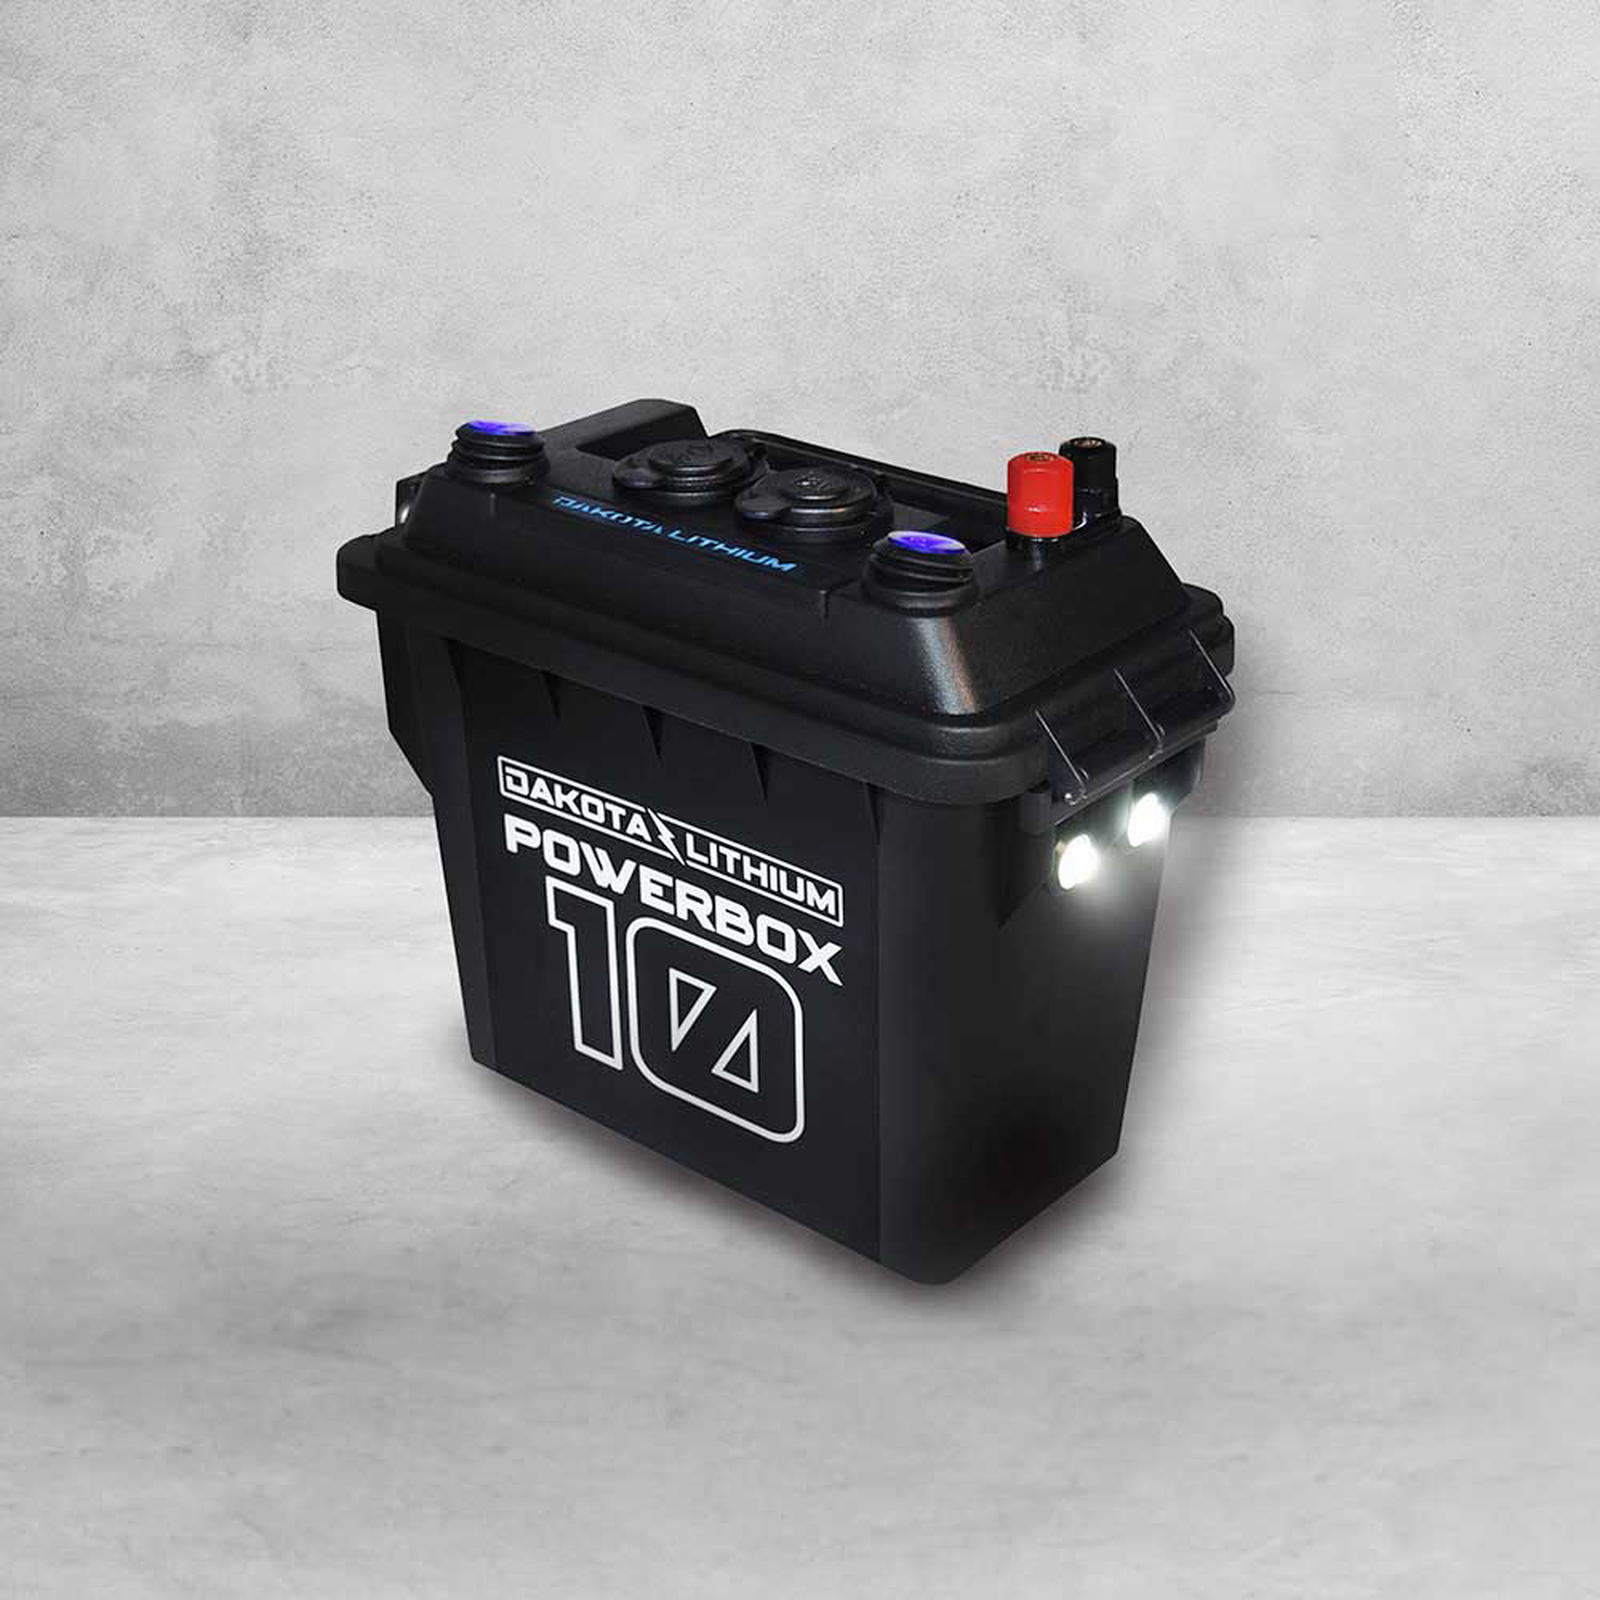 Dakota Lithium Powerbox 10 12V 10Ah Battery